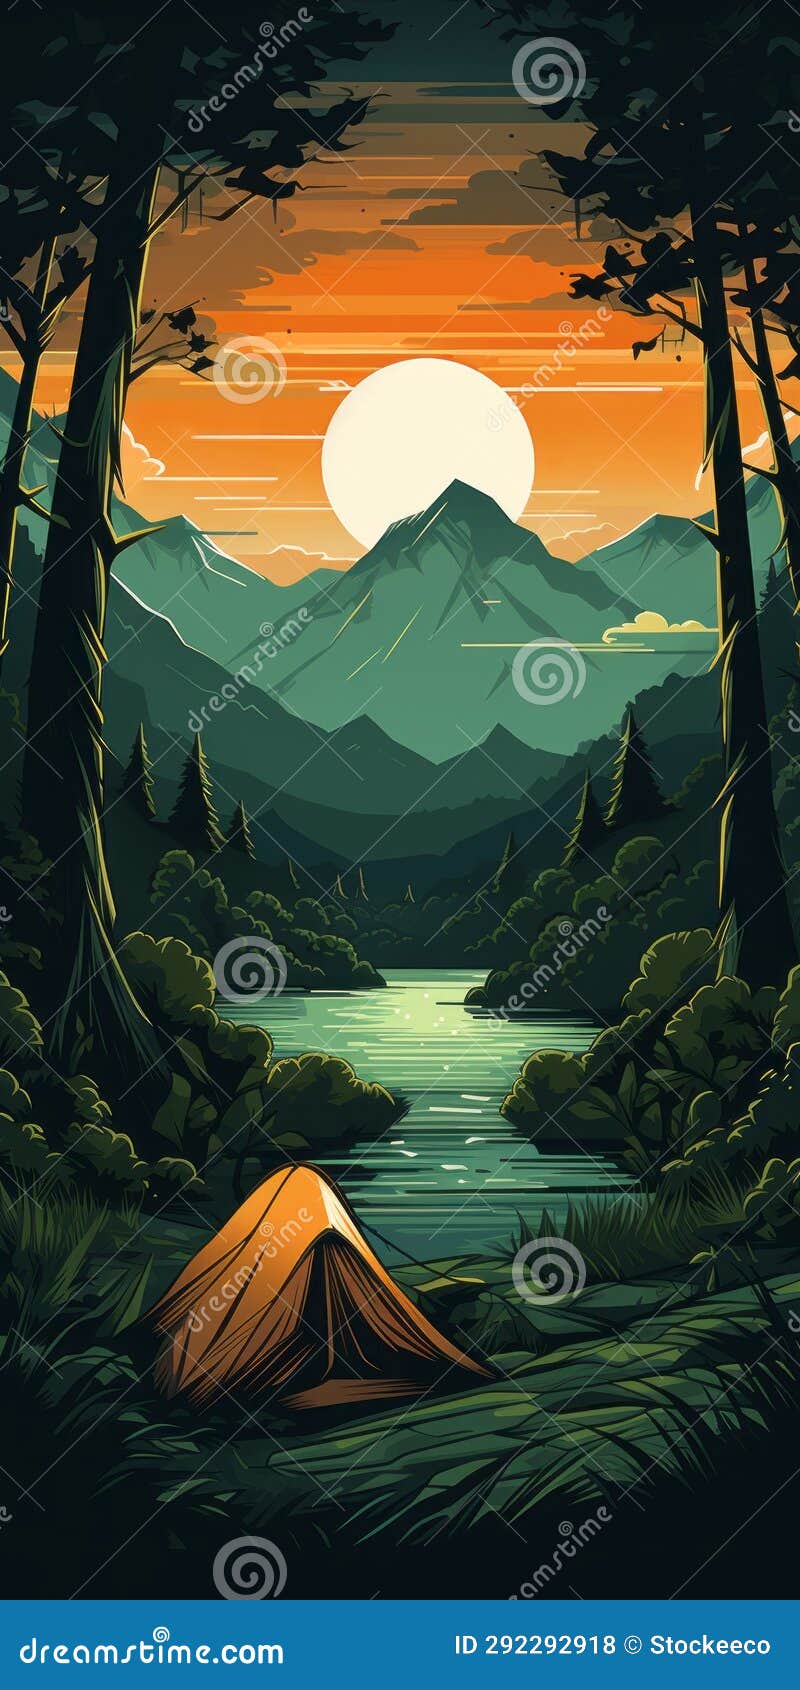 retrovirus camping poster: scenic jungle view in orange and cyan